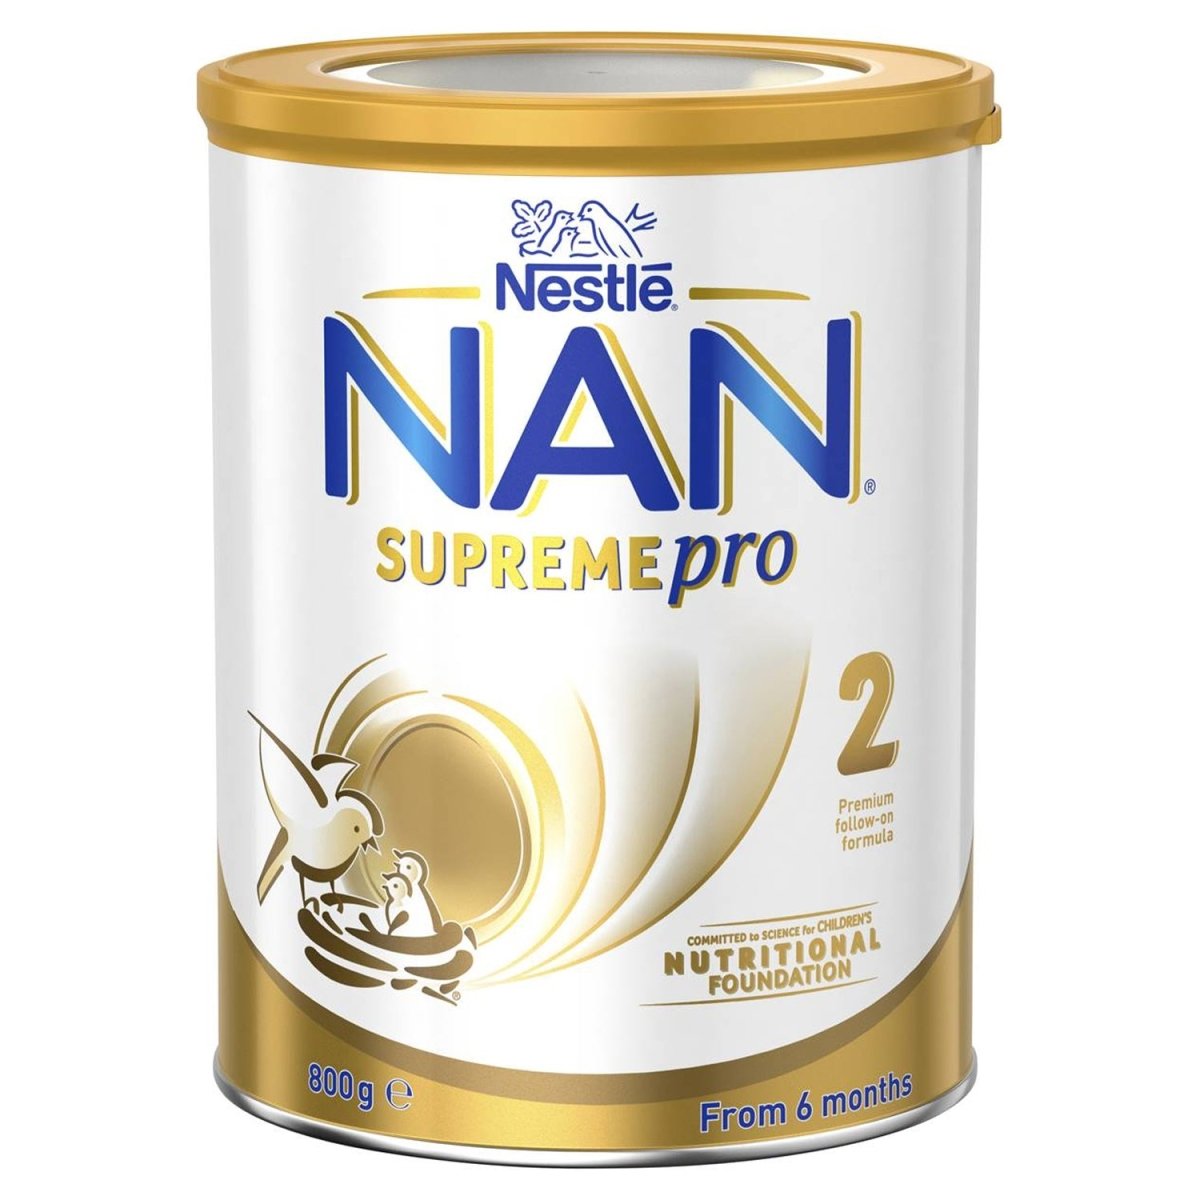 Nestlé NAN SUPREMEpro 2 6-12 Months Premium Follow-On Formula Powder 800g